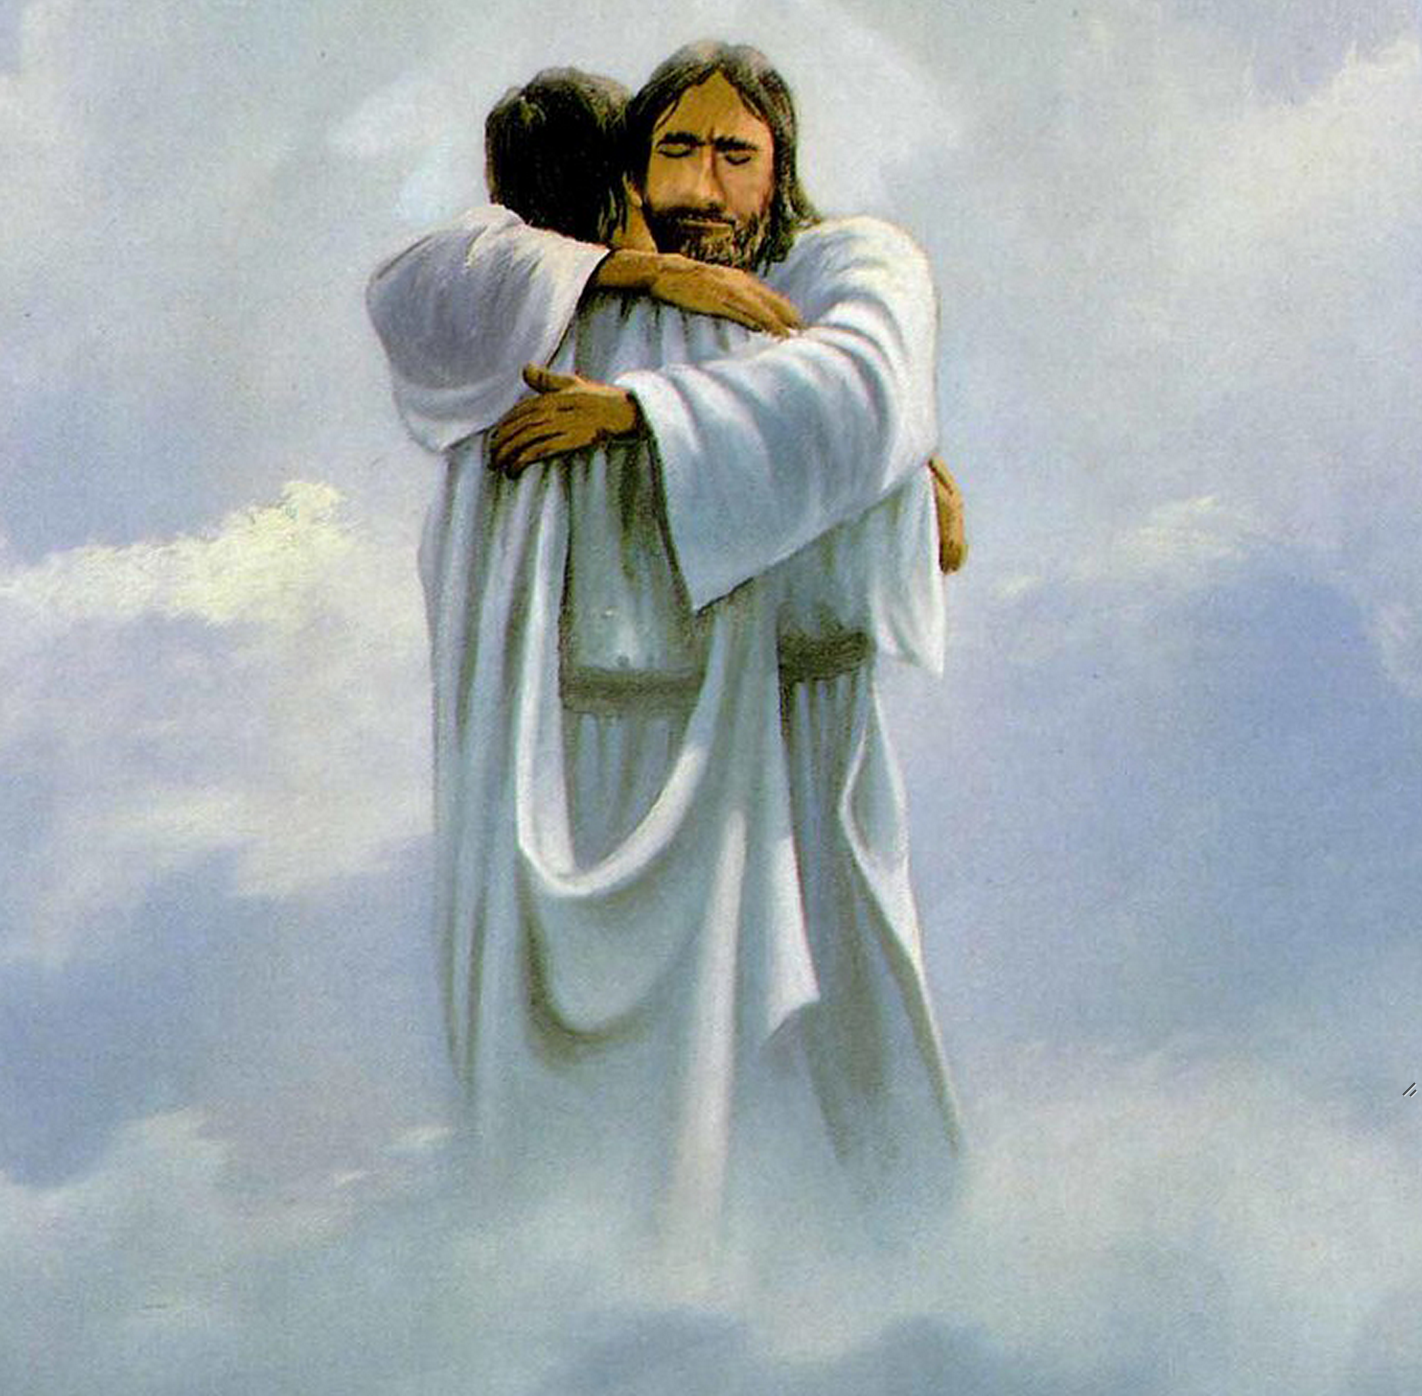 https://mormonhub.com/wp-content/uploads/2014/05/Embraced-in-the-Hug-of-Jesus-Christ.png